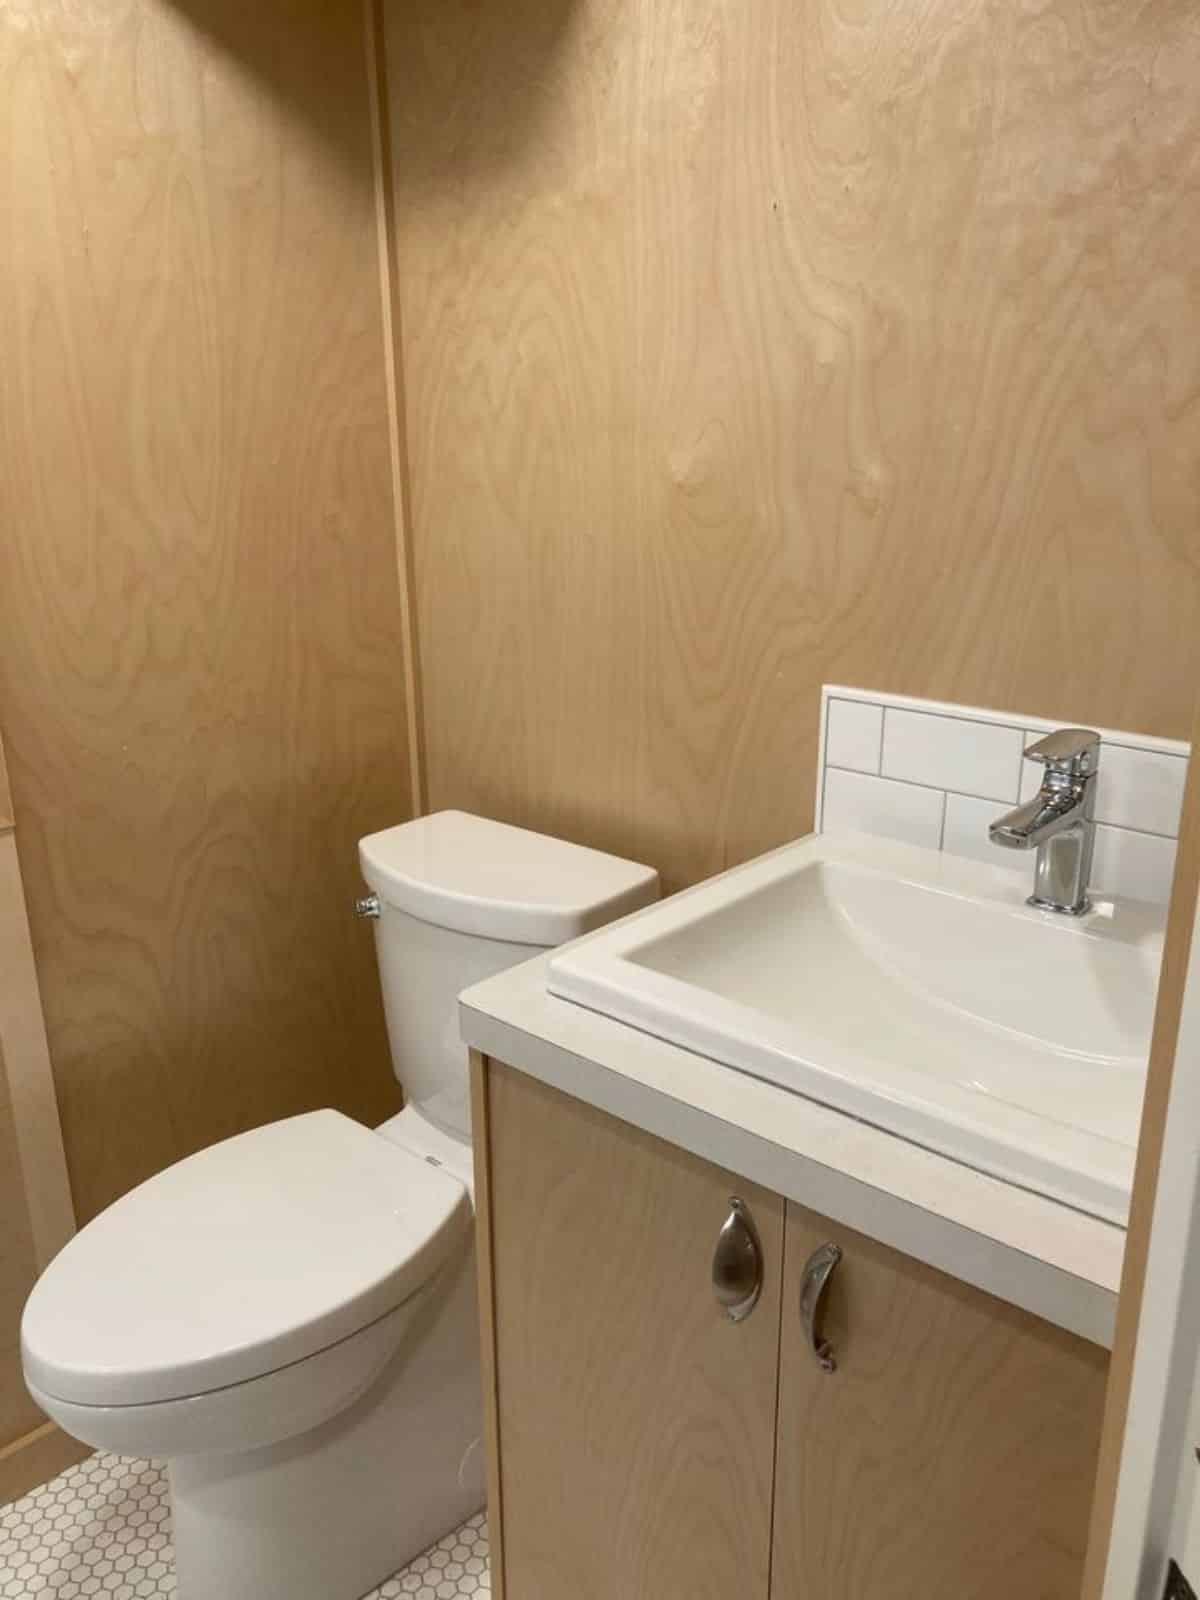 standard fittings in bathroom of 24’ custom tiny home